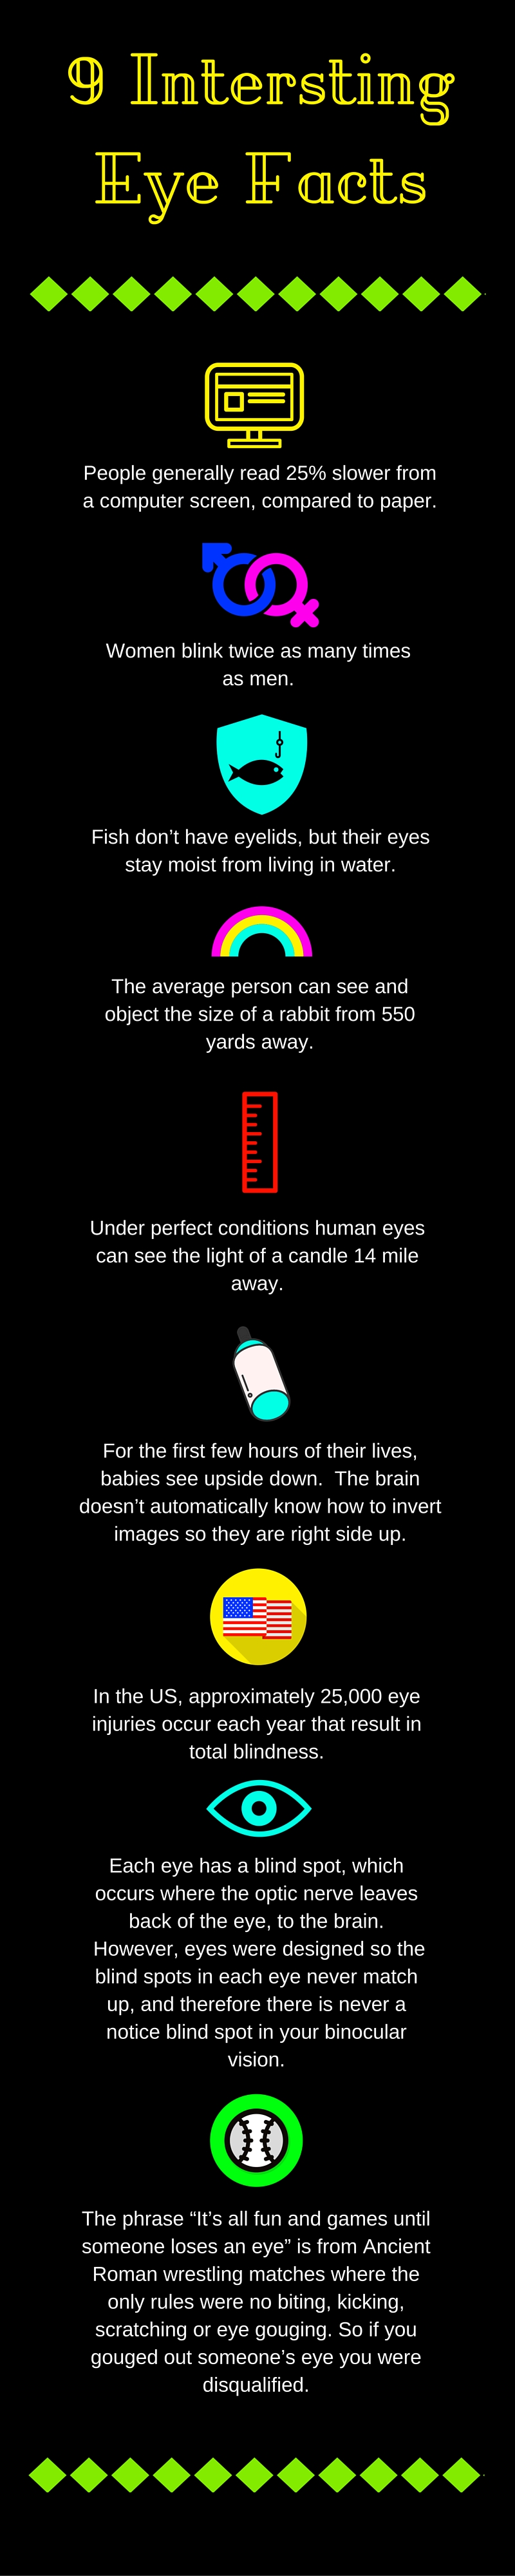 eye facts